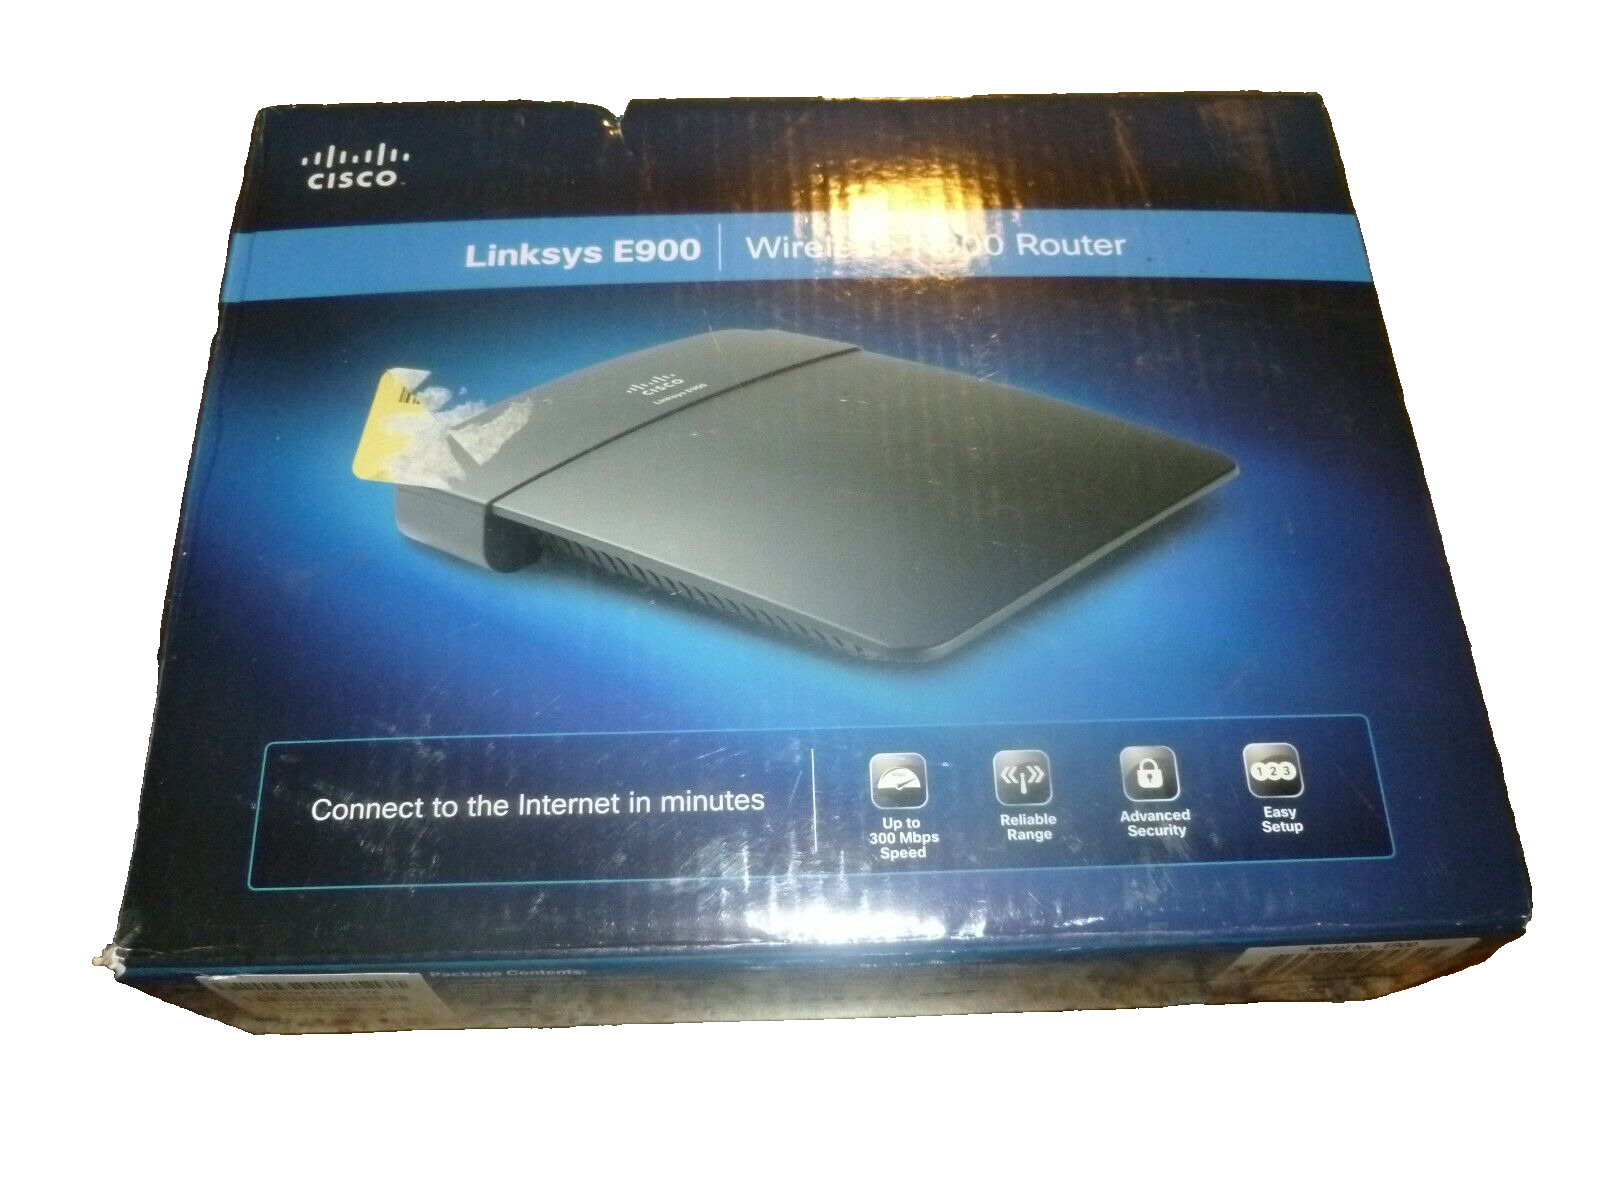 Cisco Linksys E900 Wireless-N300 Router (Windows Mac)